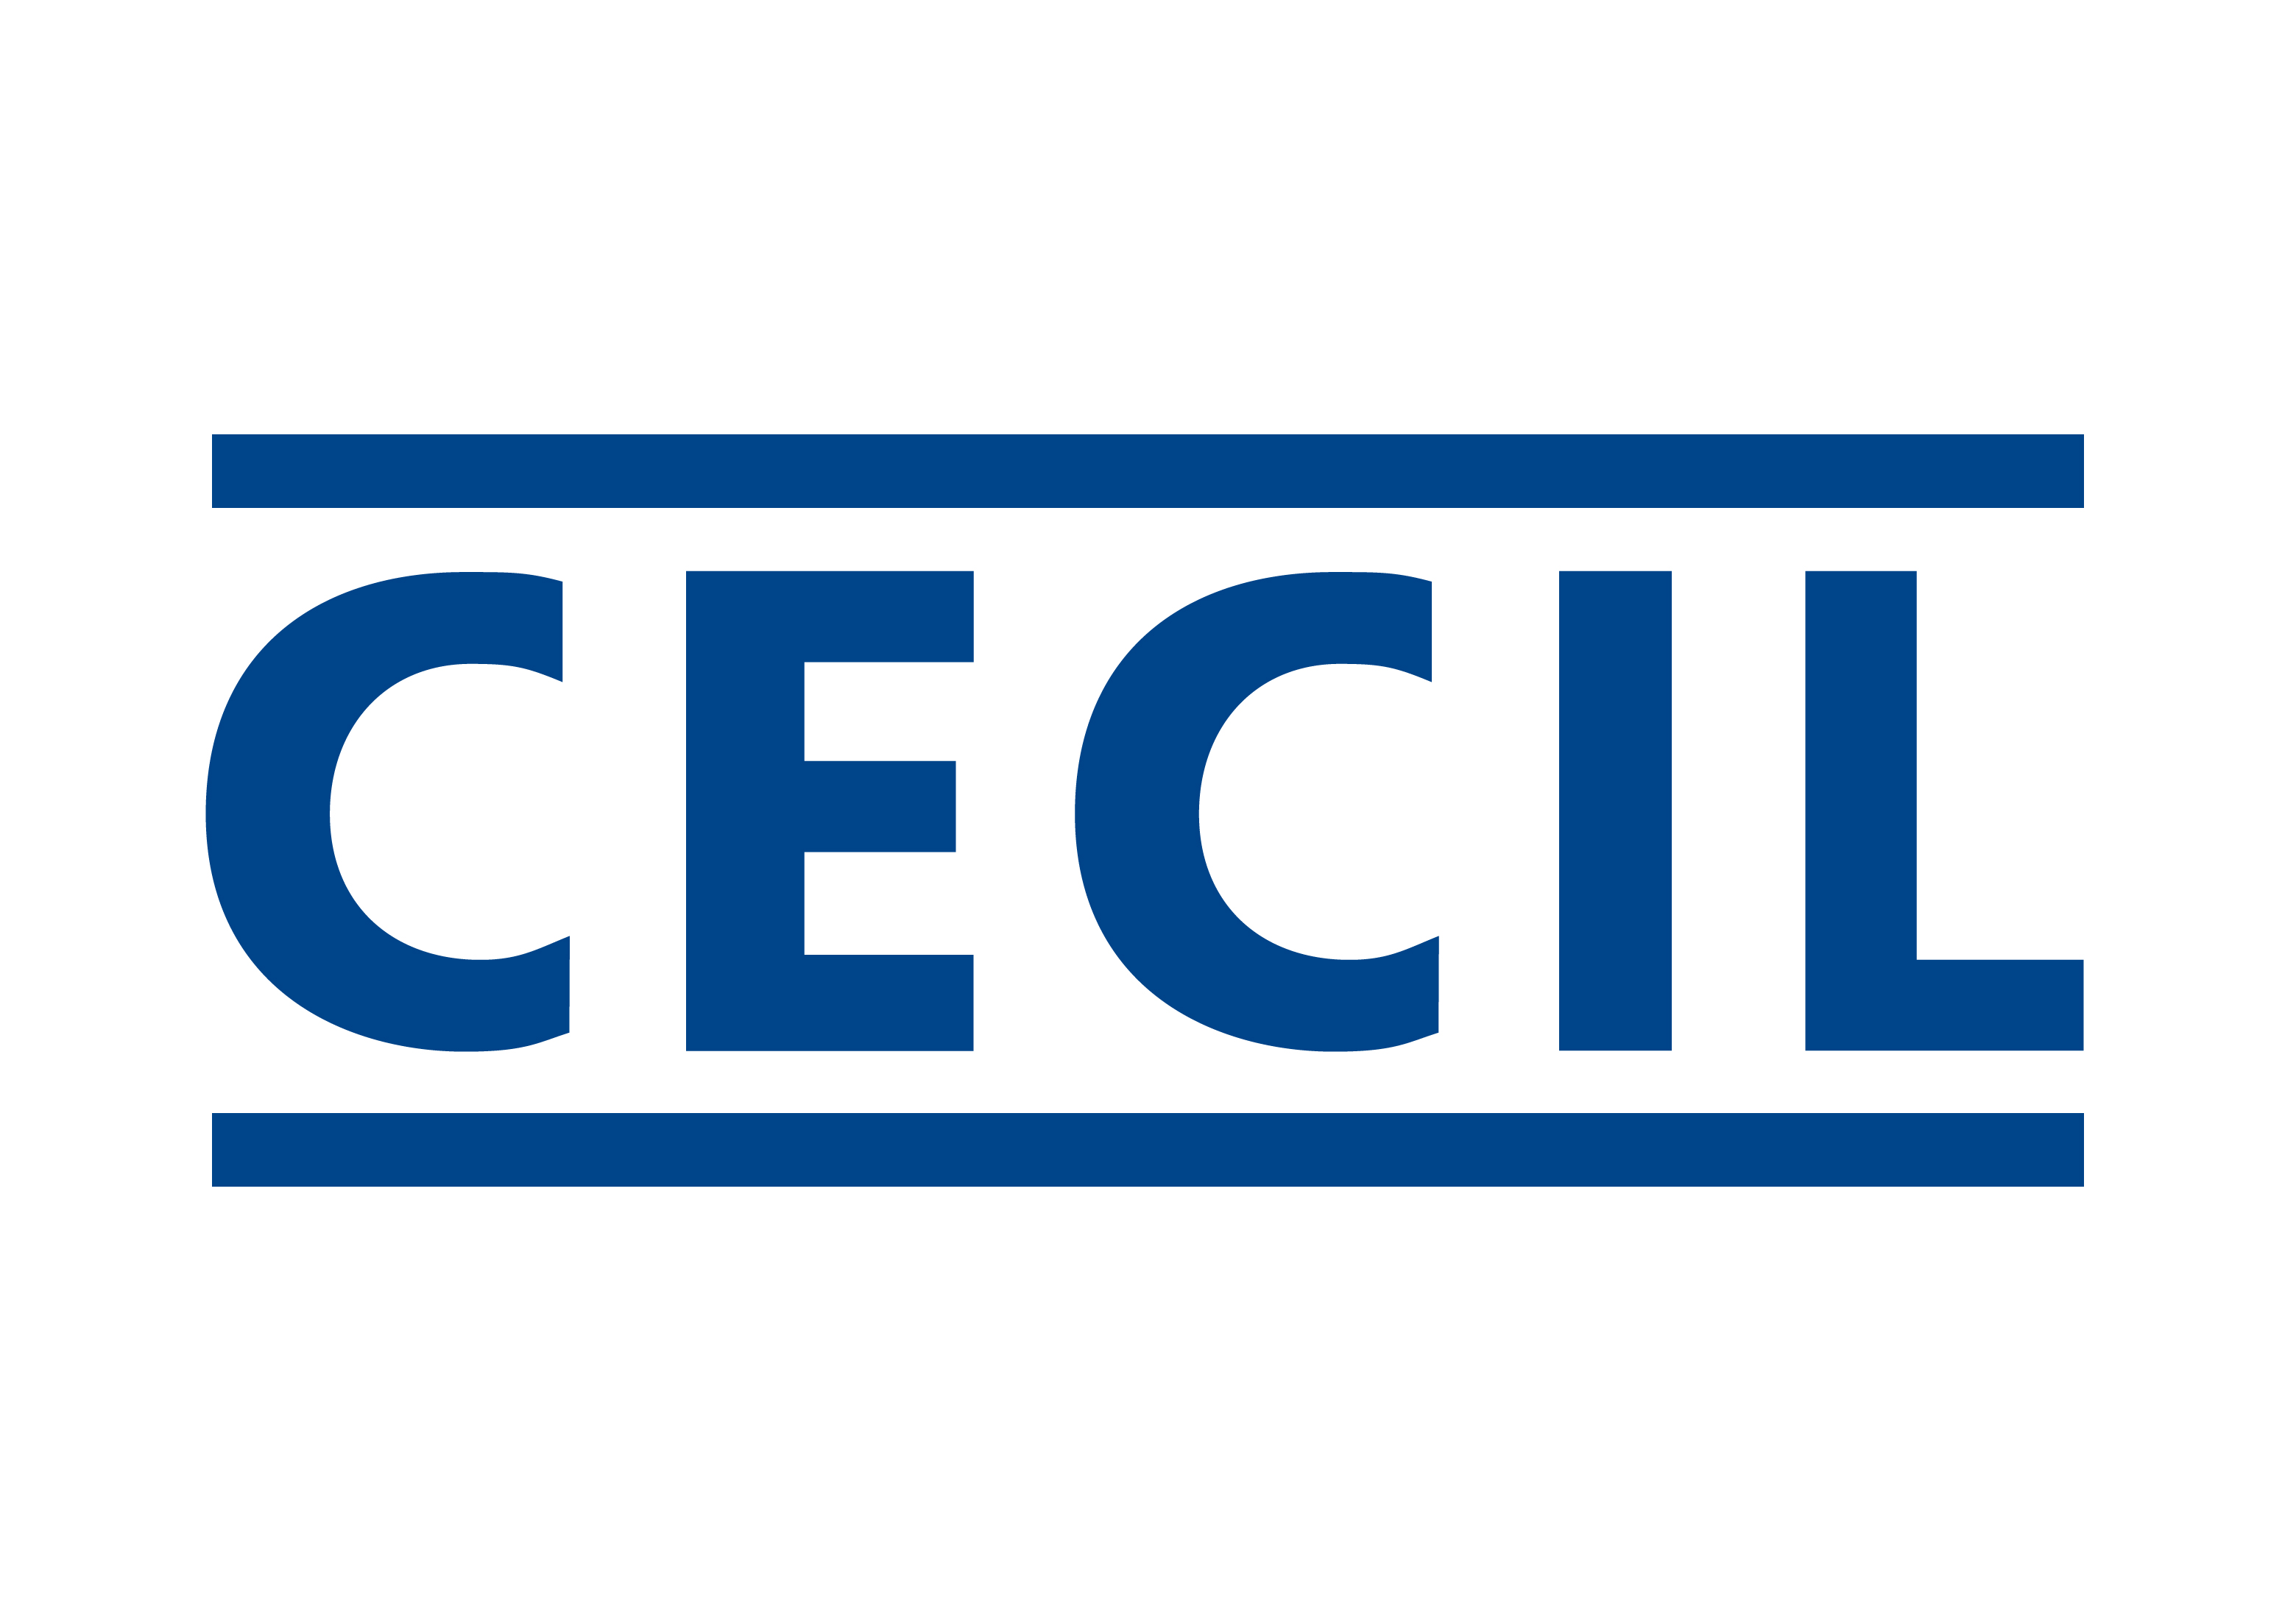 CECIL_logo.JPG